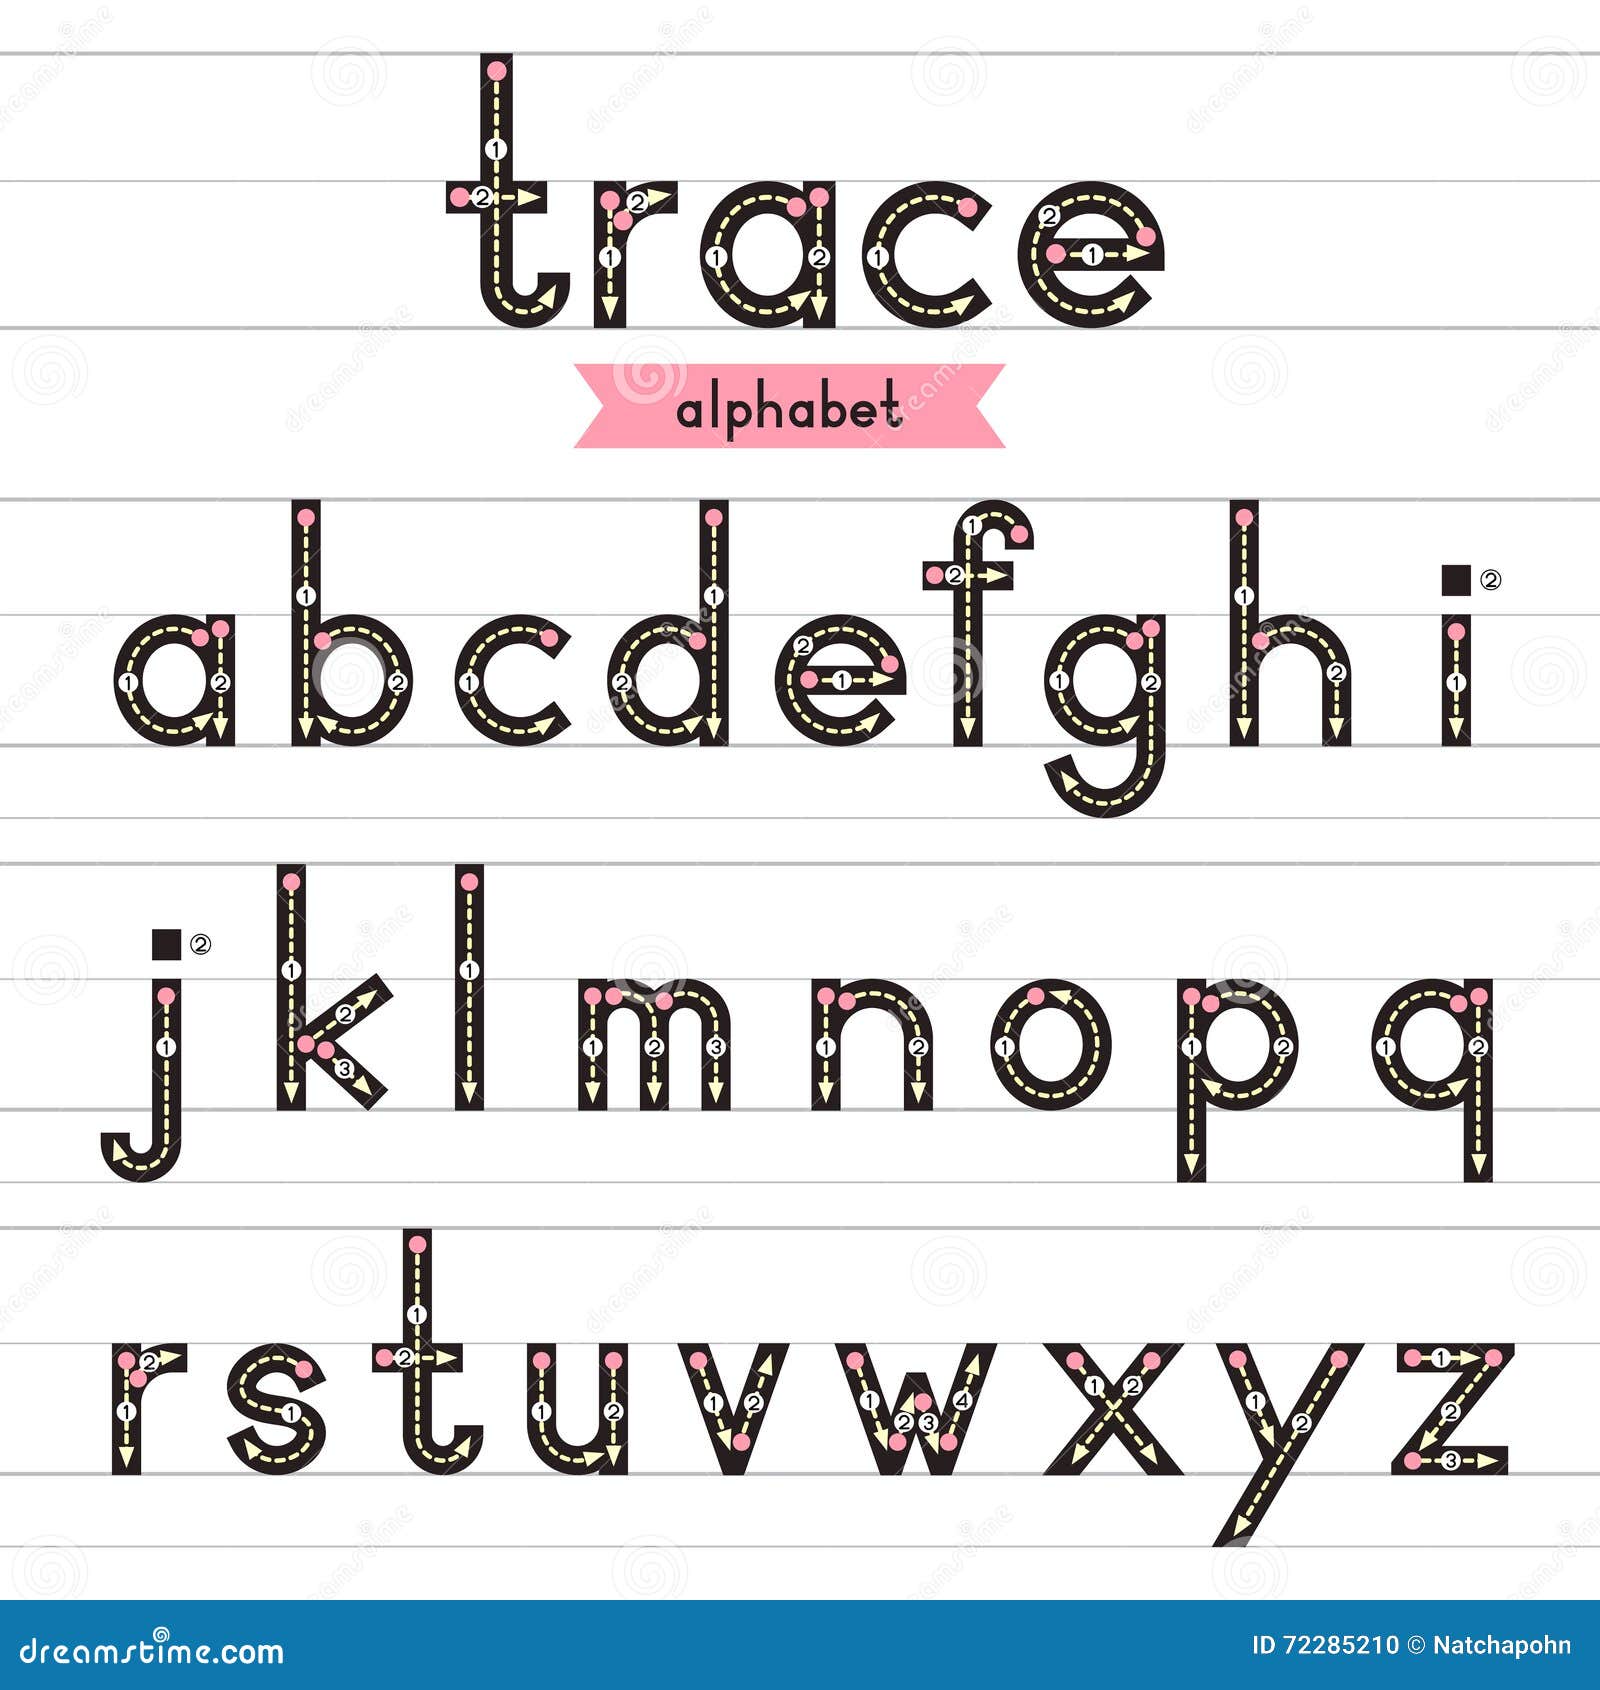 trace alphabet lowercase letters.